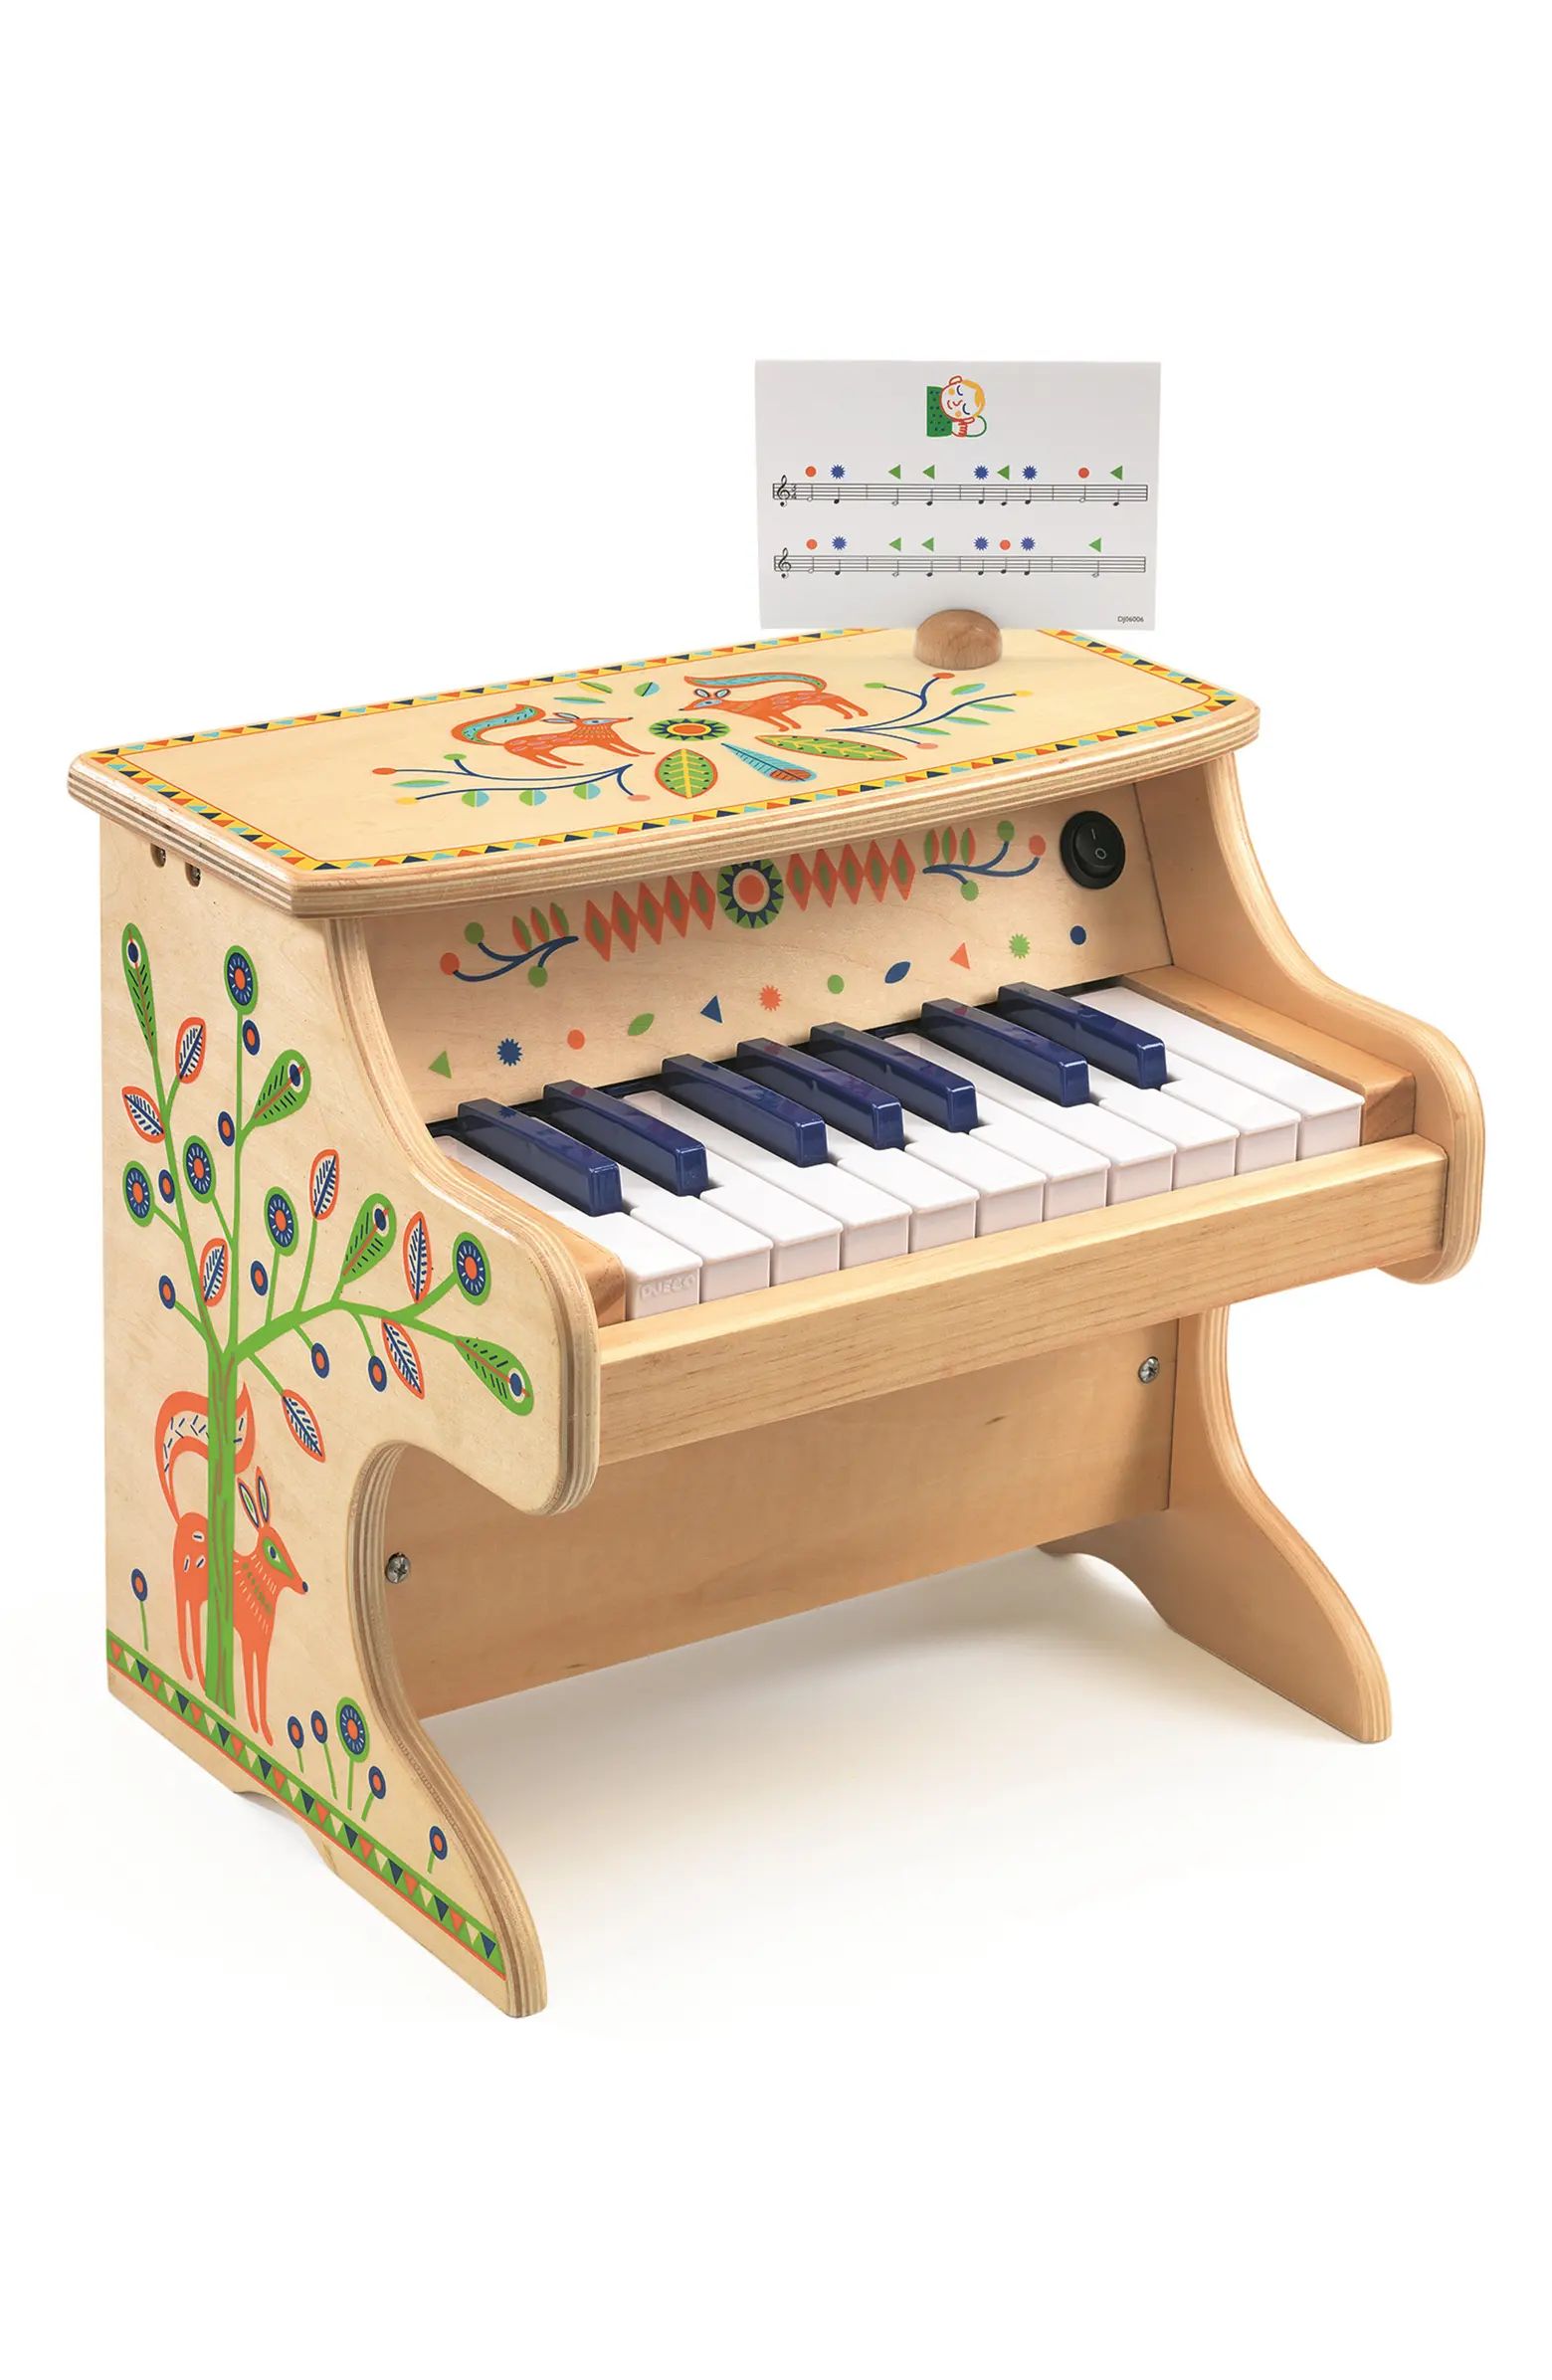 Djeco Animambo Electronic Toy Piano | Nordstrom | Nordstrom